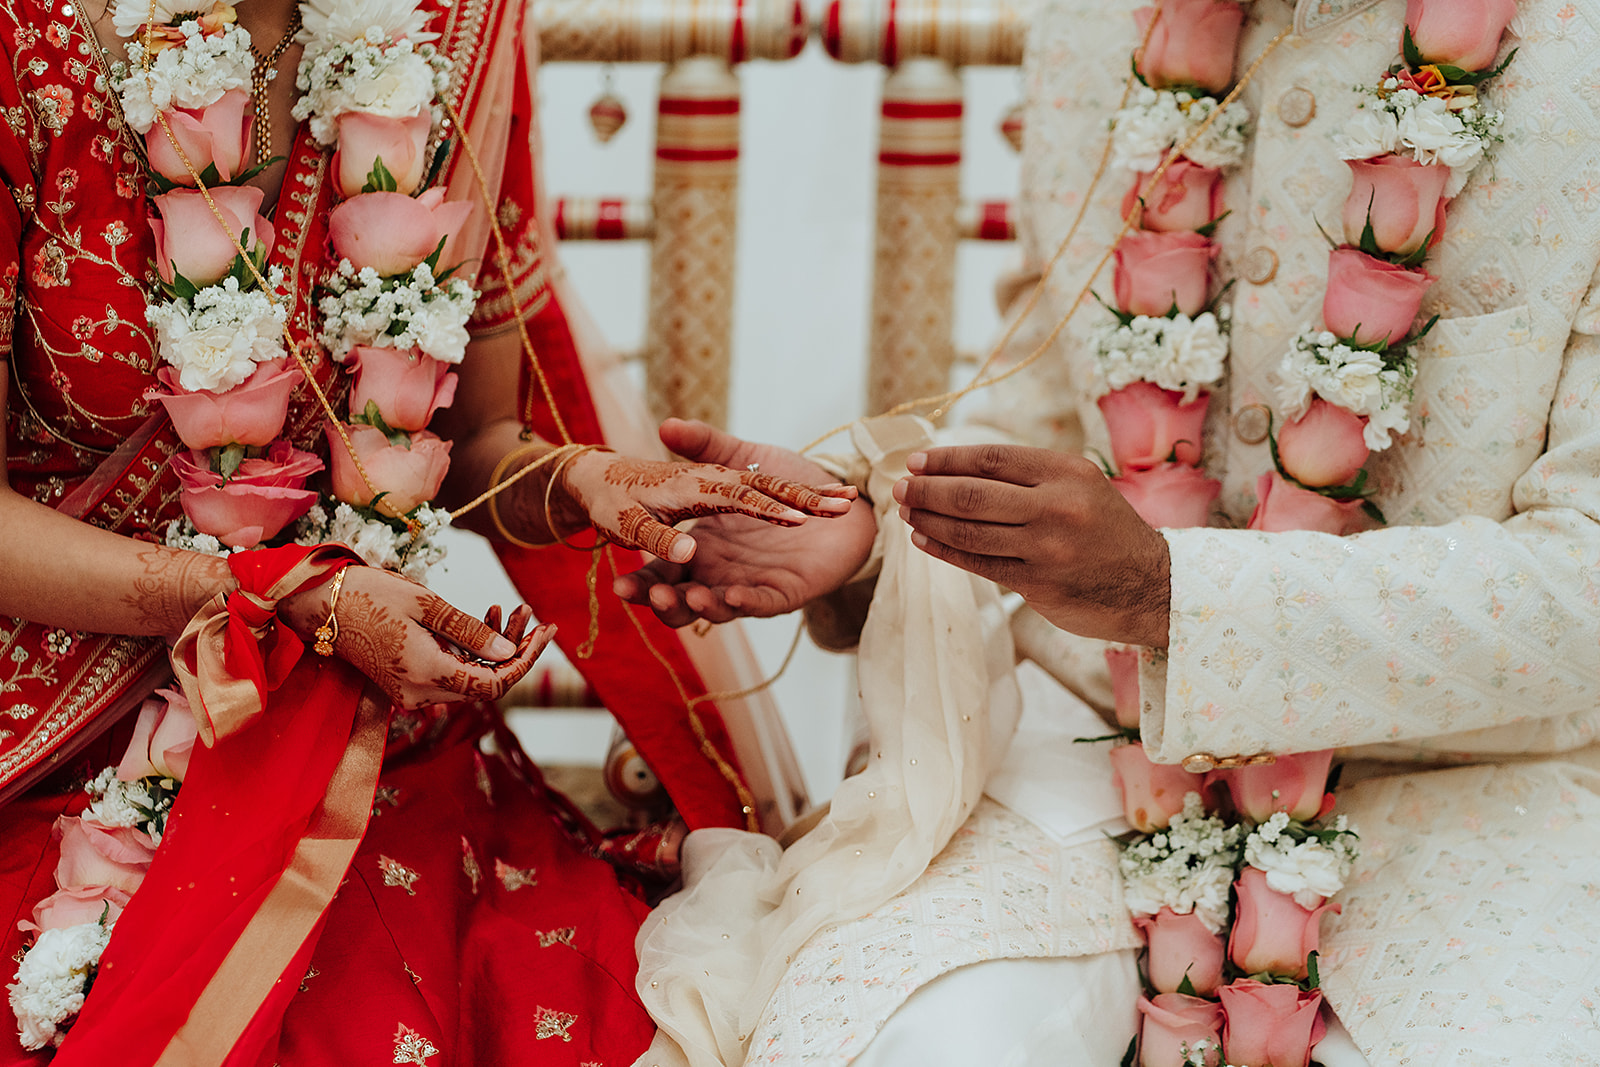 Orange county Indian wedding photography with traditional rituals wedding flowers exchange rings